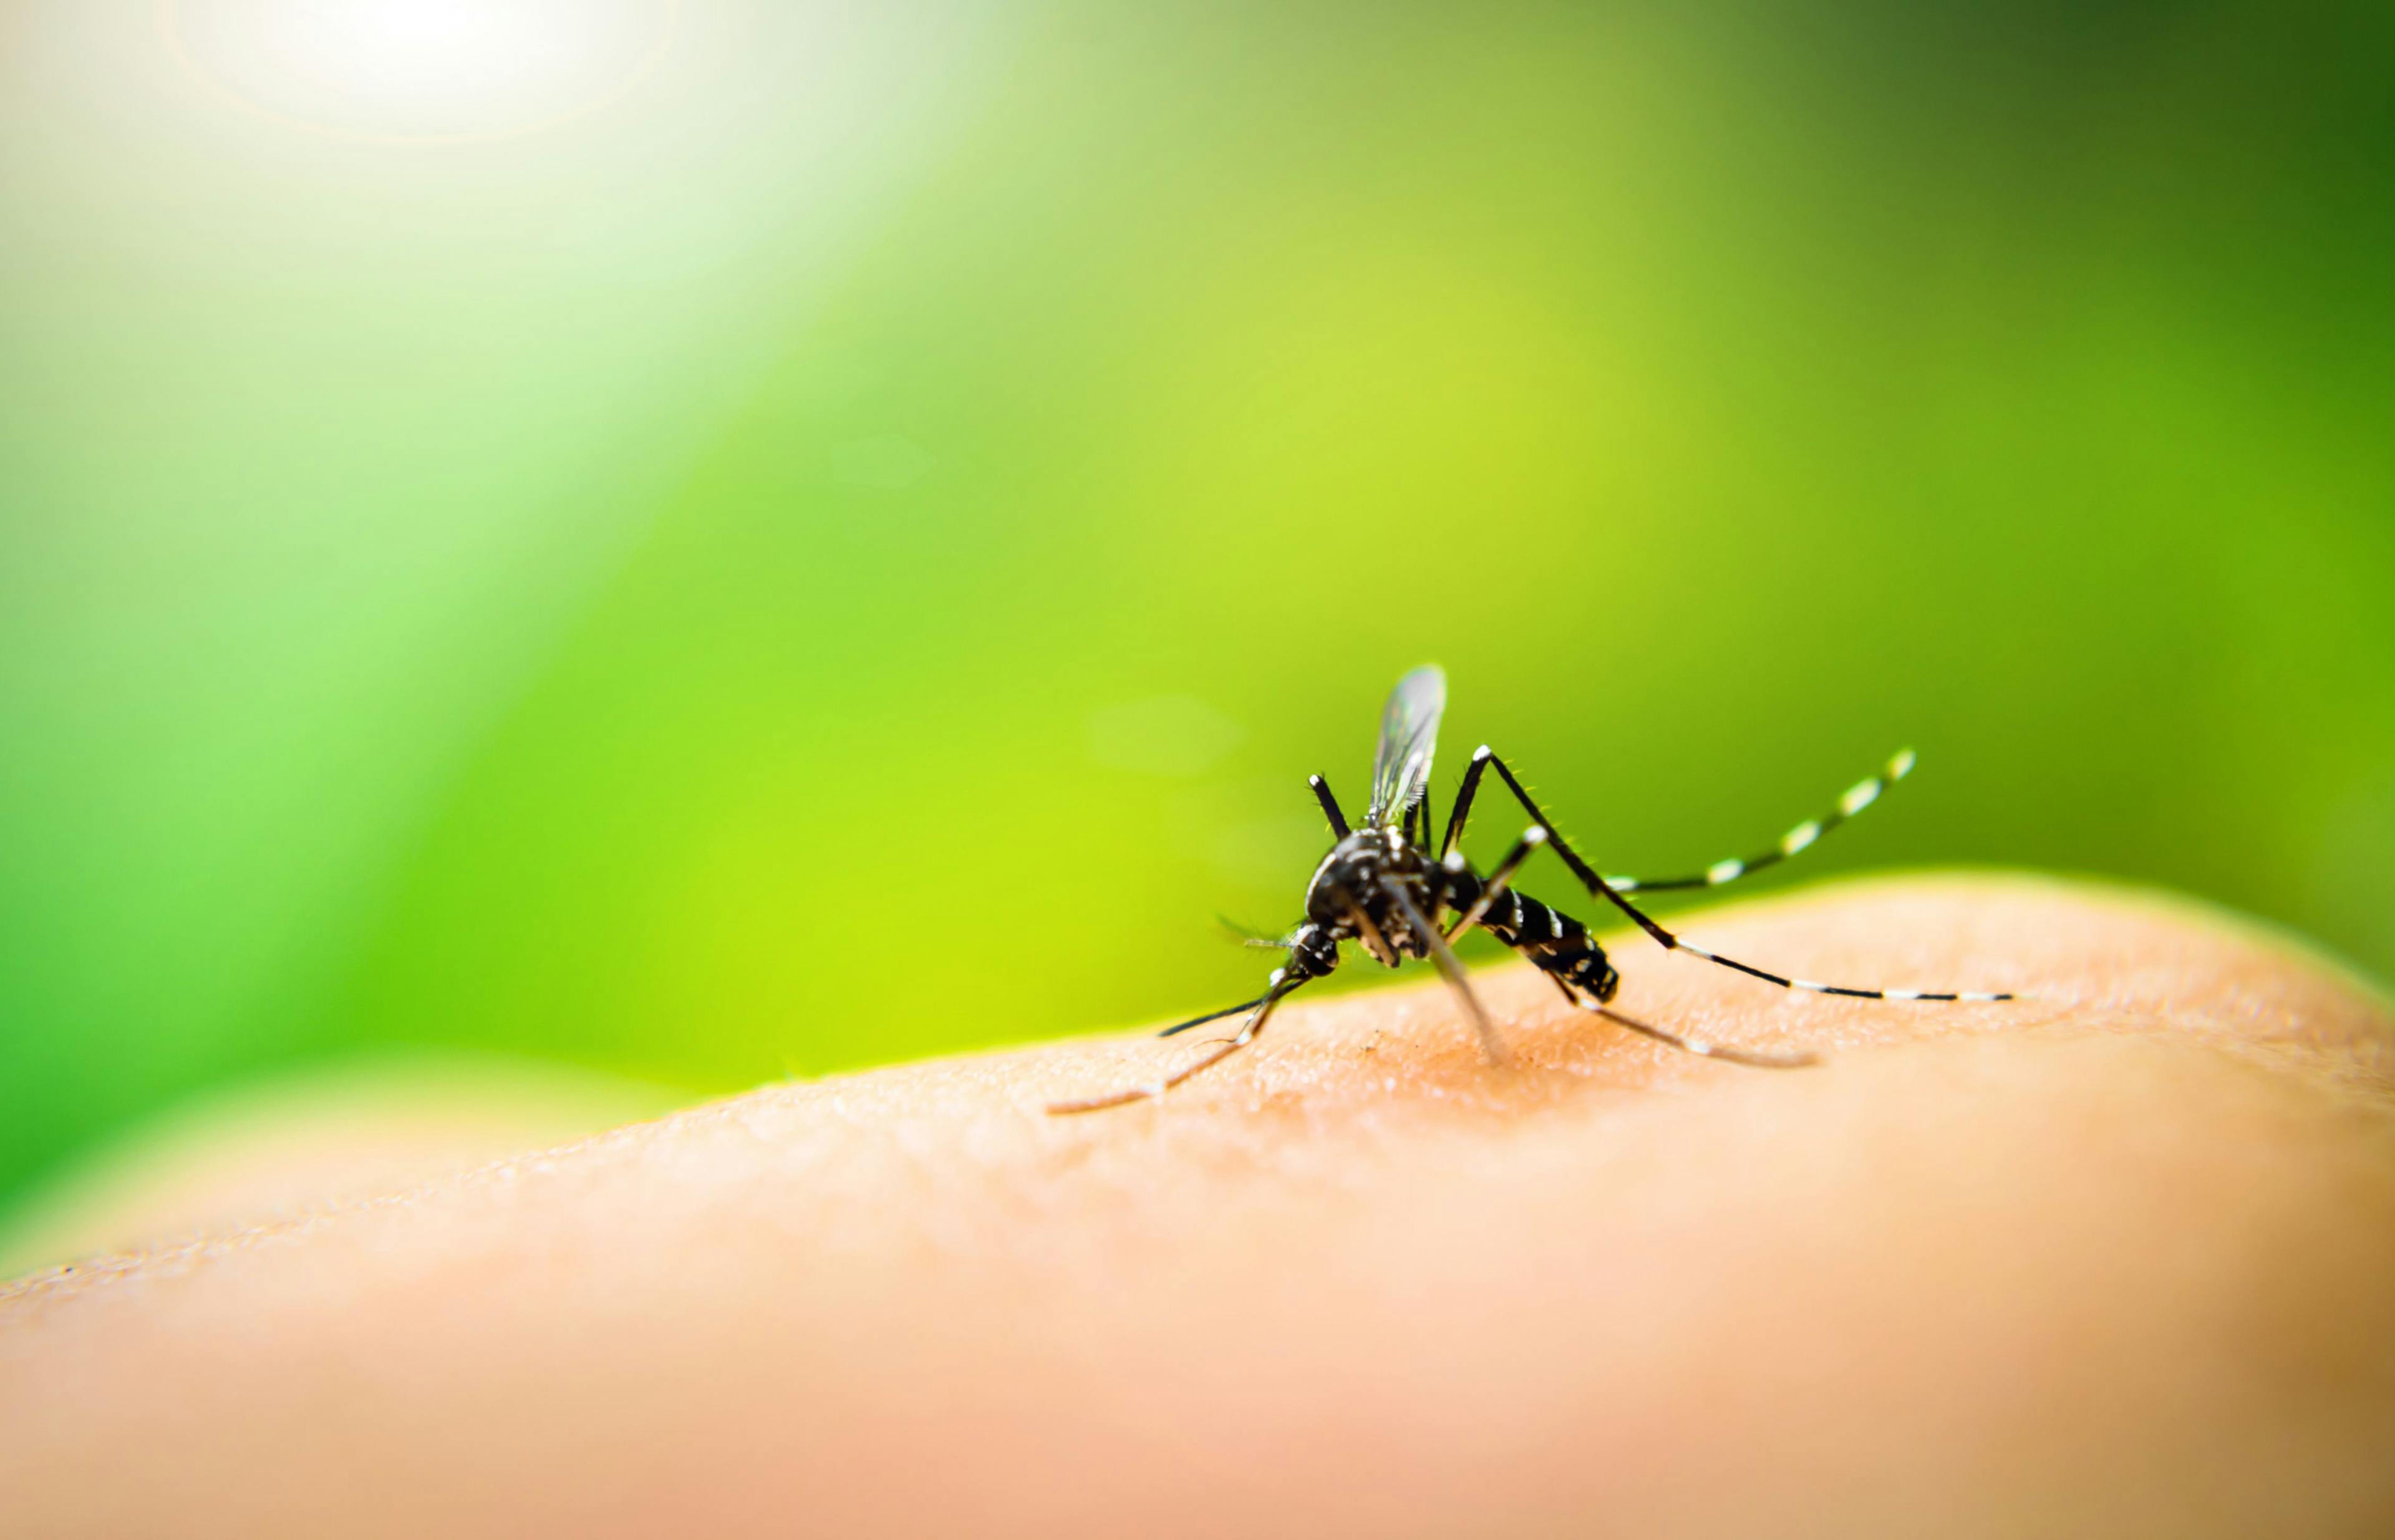 A mosquito biting a human. © auimeesri - stock.adobe.com 